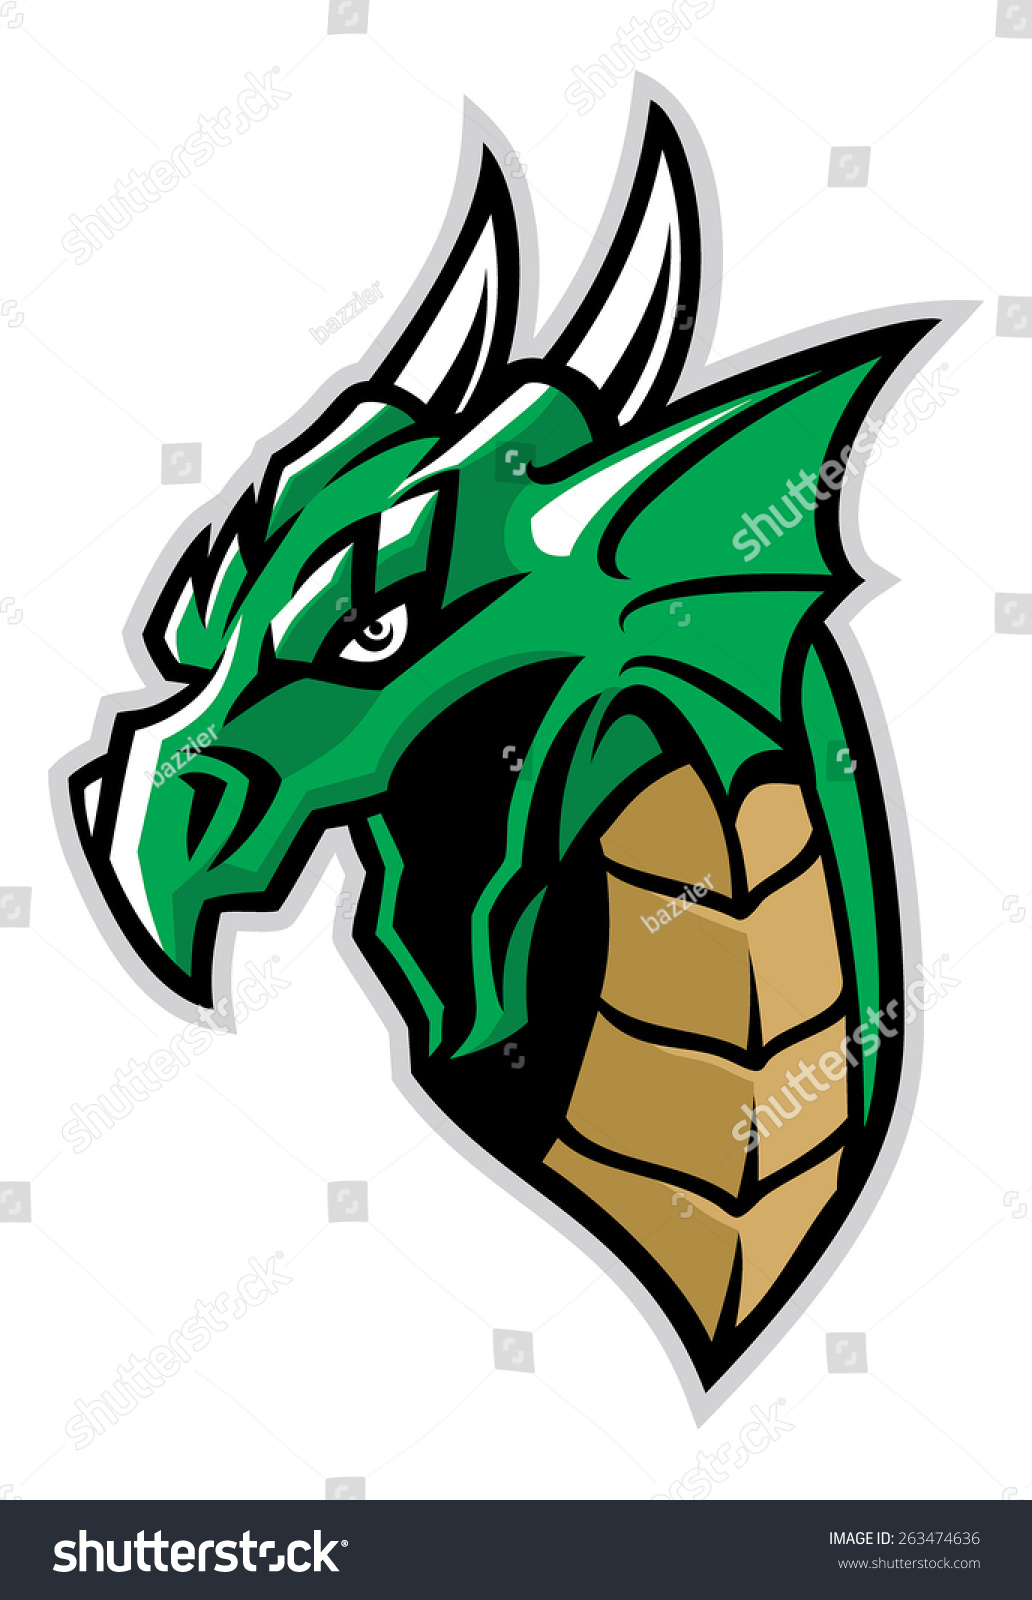 Green Dragon Head Mascot Stock Vector 263474636 - Shutterstock